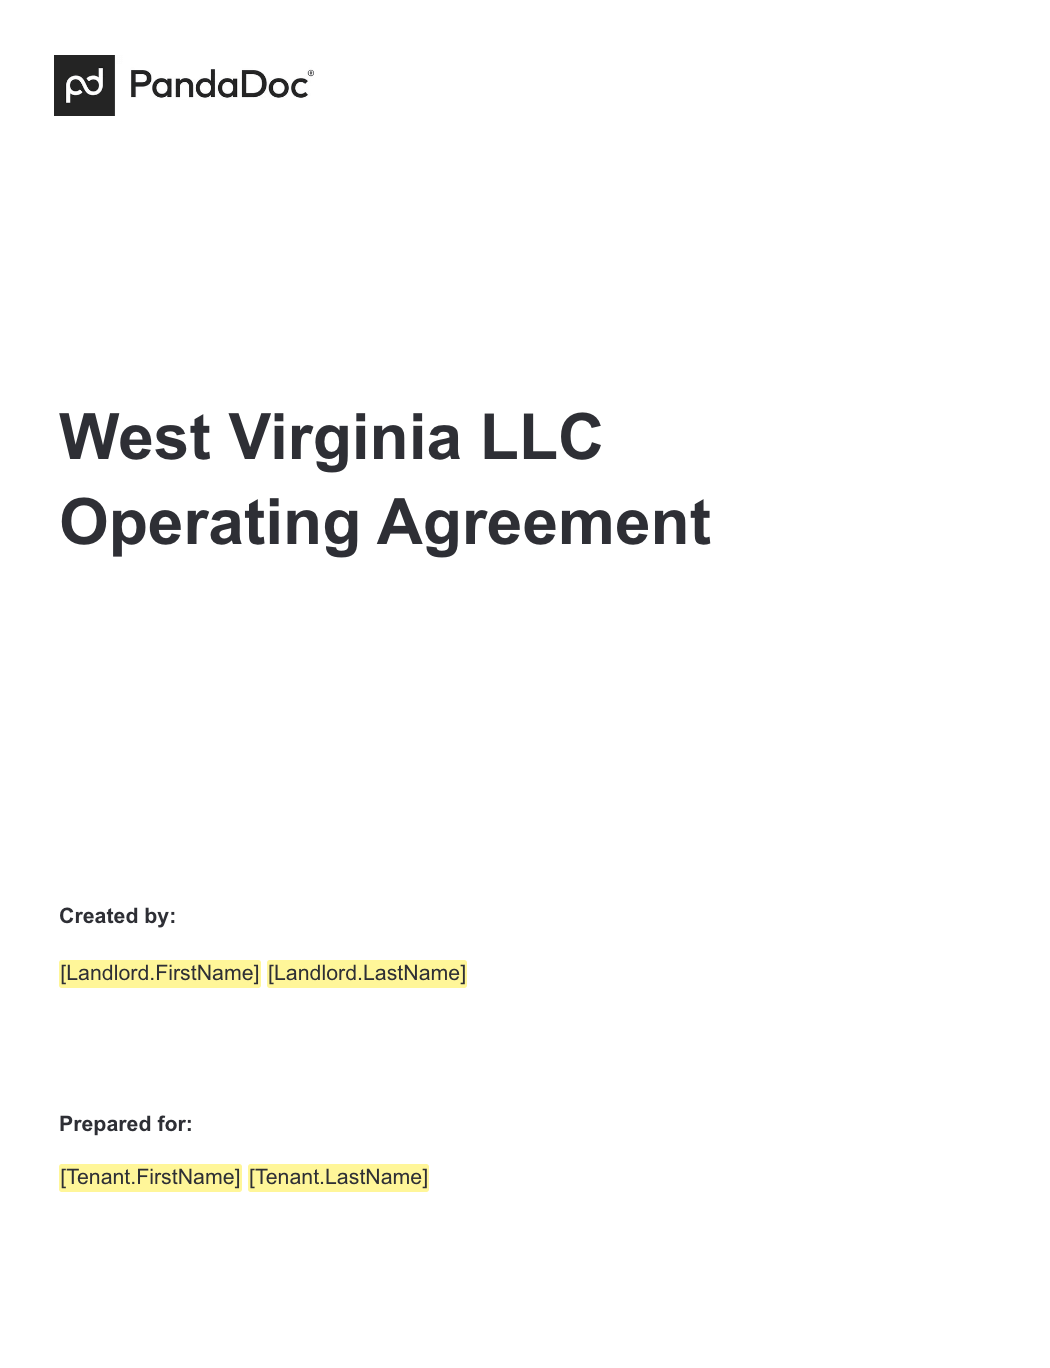 West Virginia LLC Operating Agreements